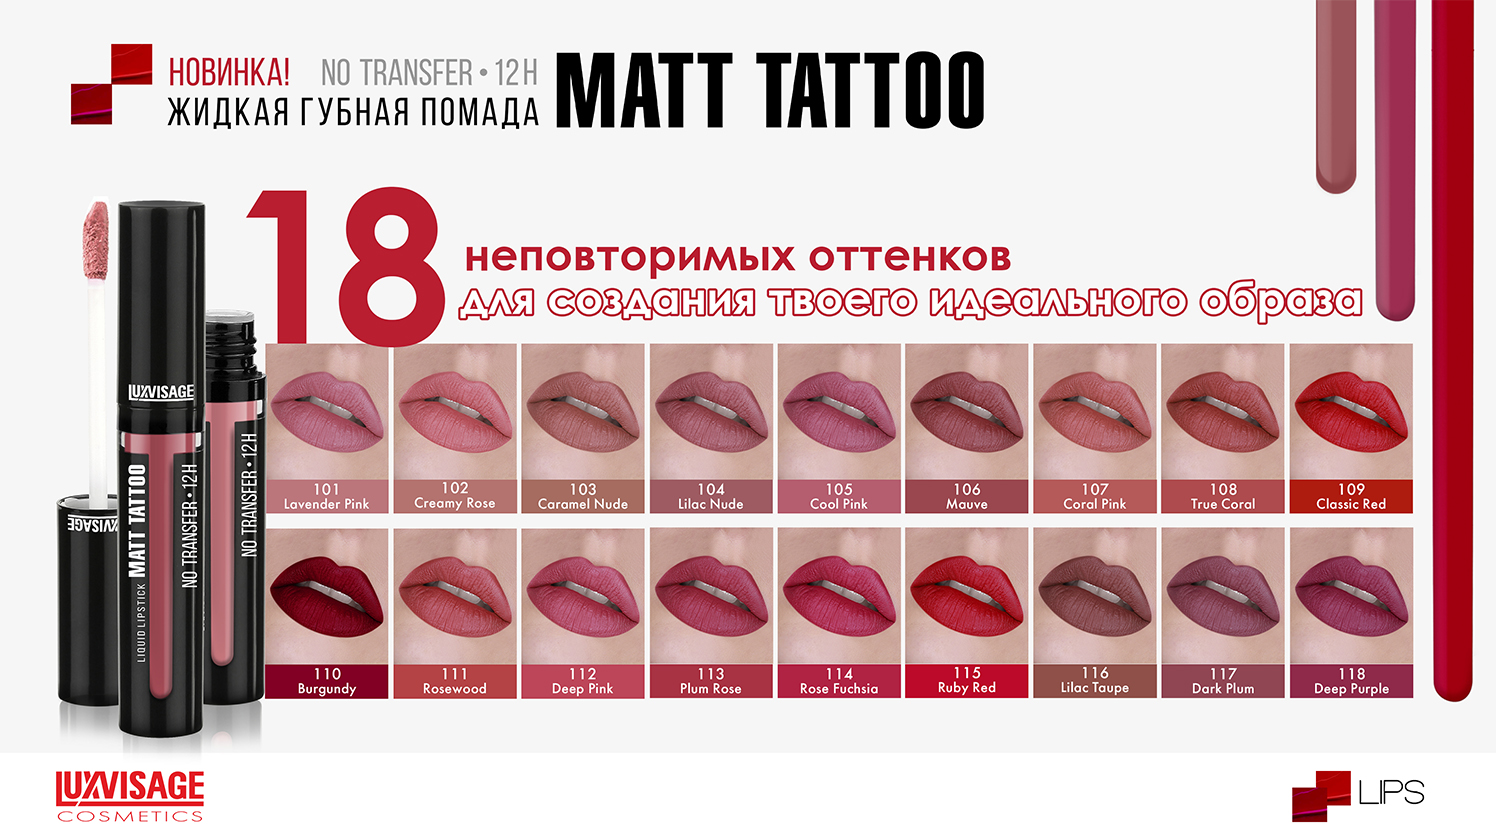 Жидкая губная помада LUXVISAGE Matt Tattoo no transfer 12h